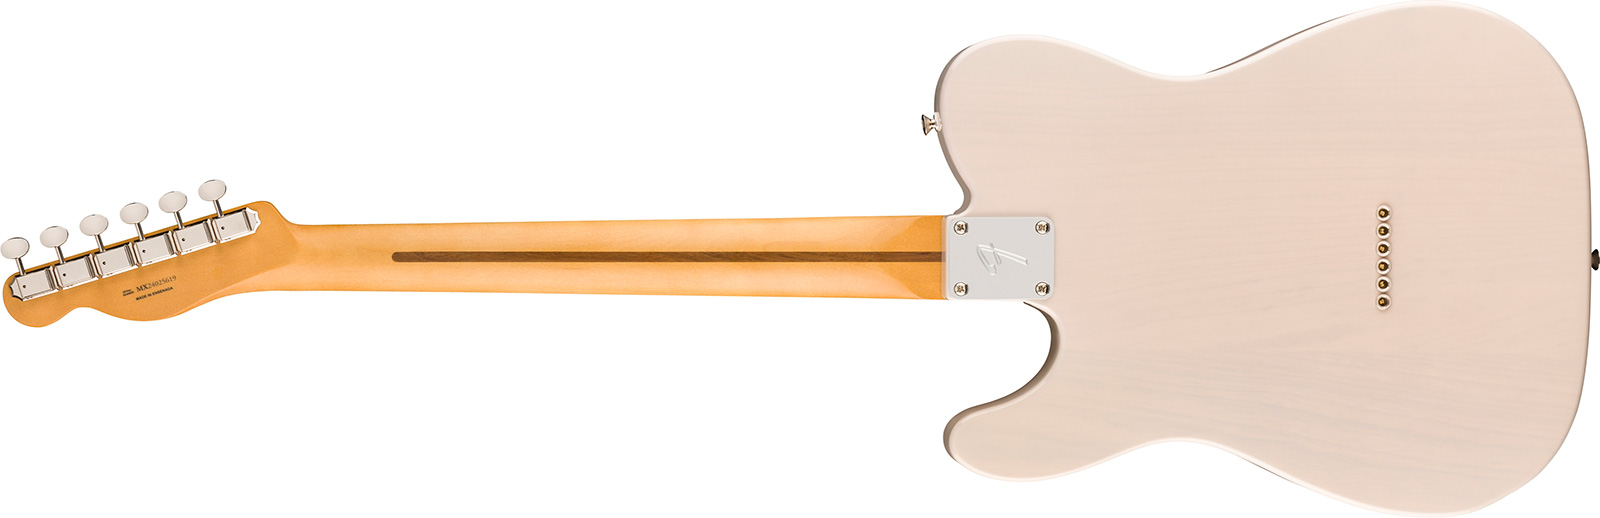 Fender Tele Player Ii Mex Frene 2s Ht Rw - White Blonde - Televorm elektrische gitaar - Variation 1